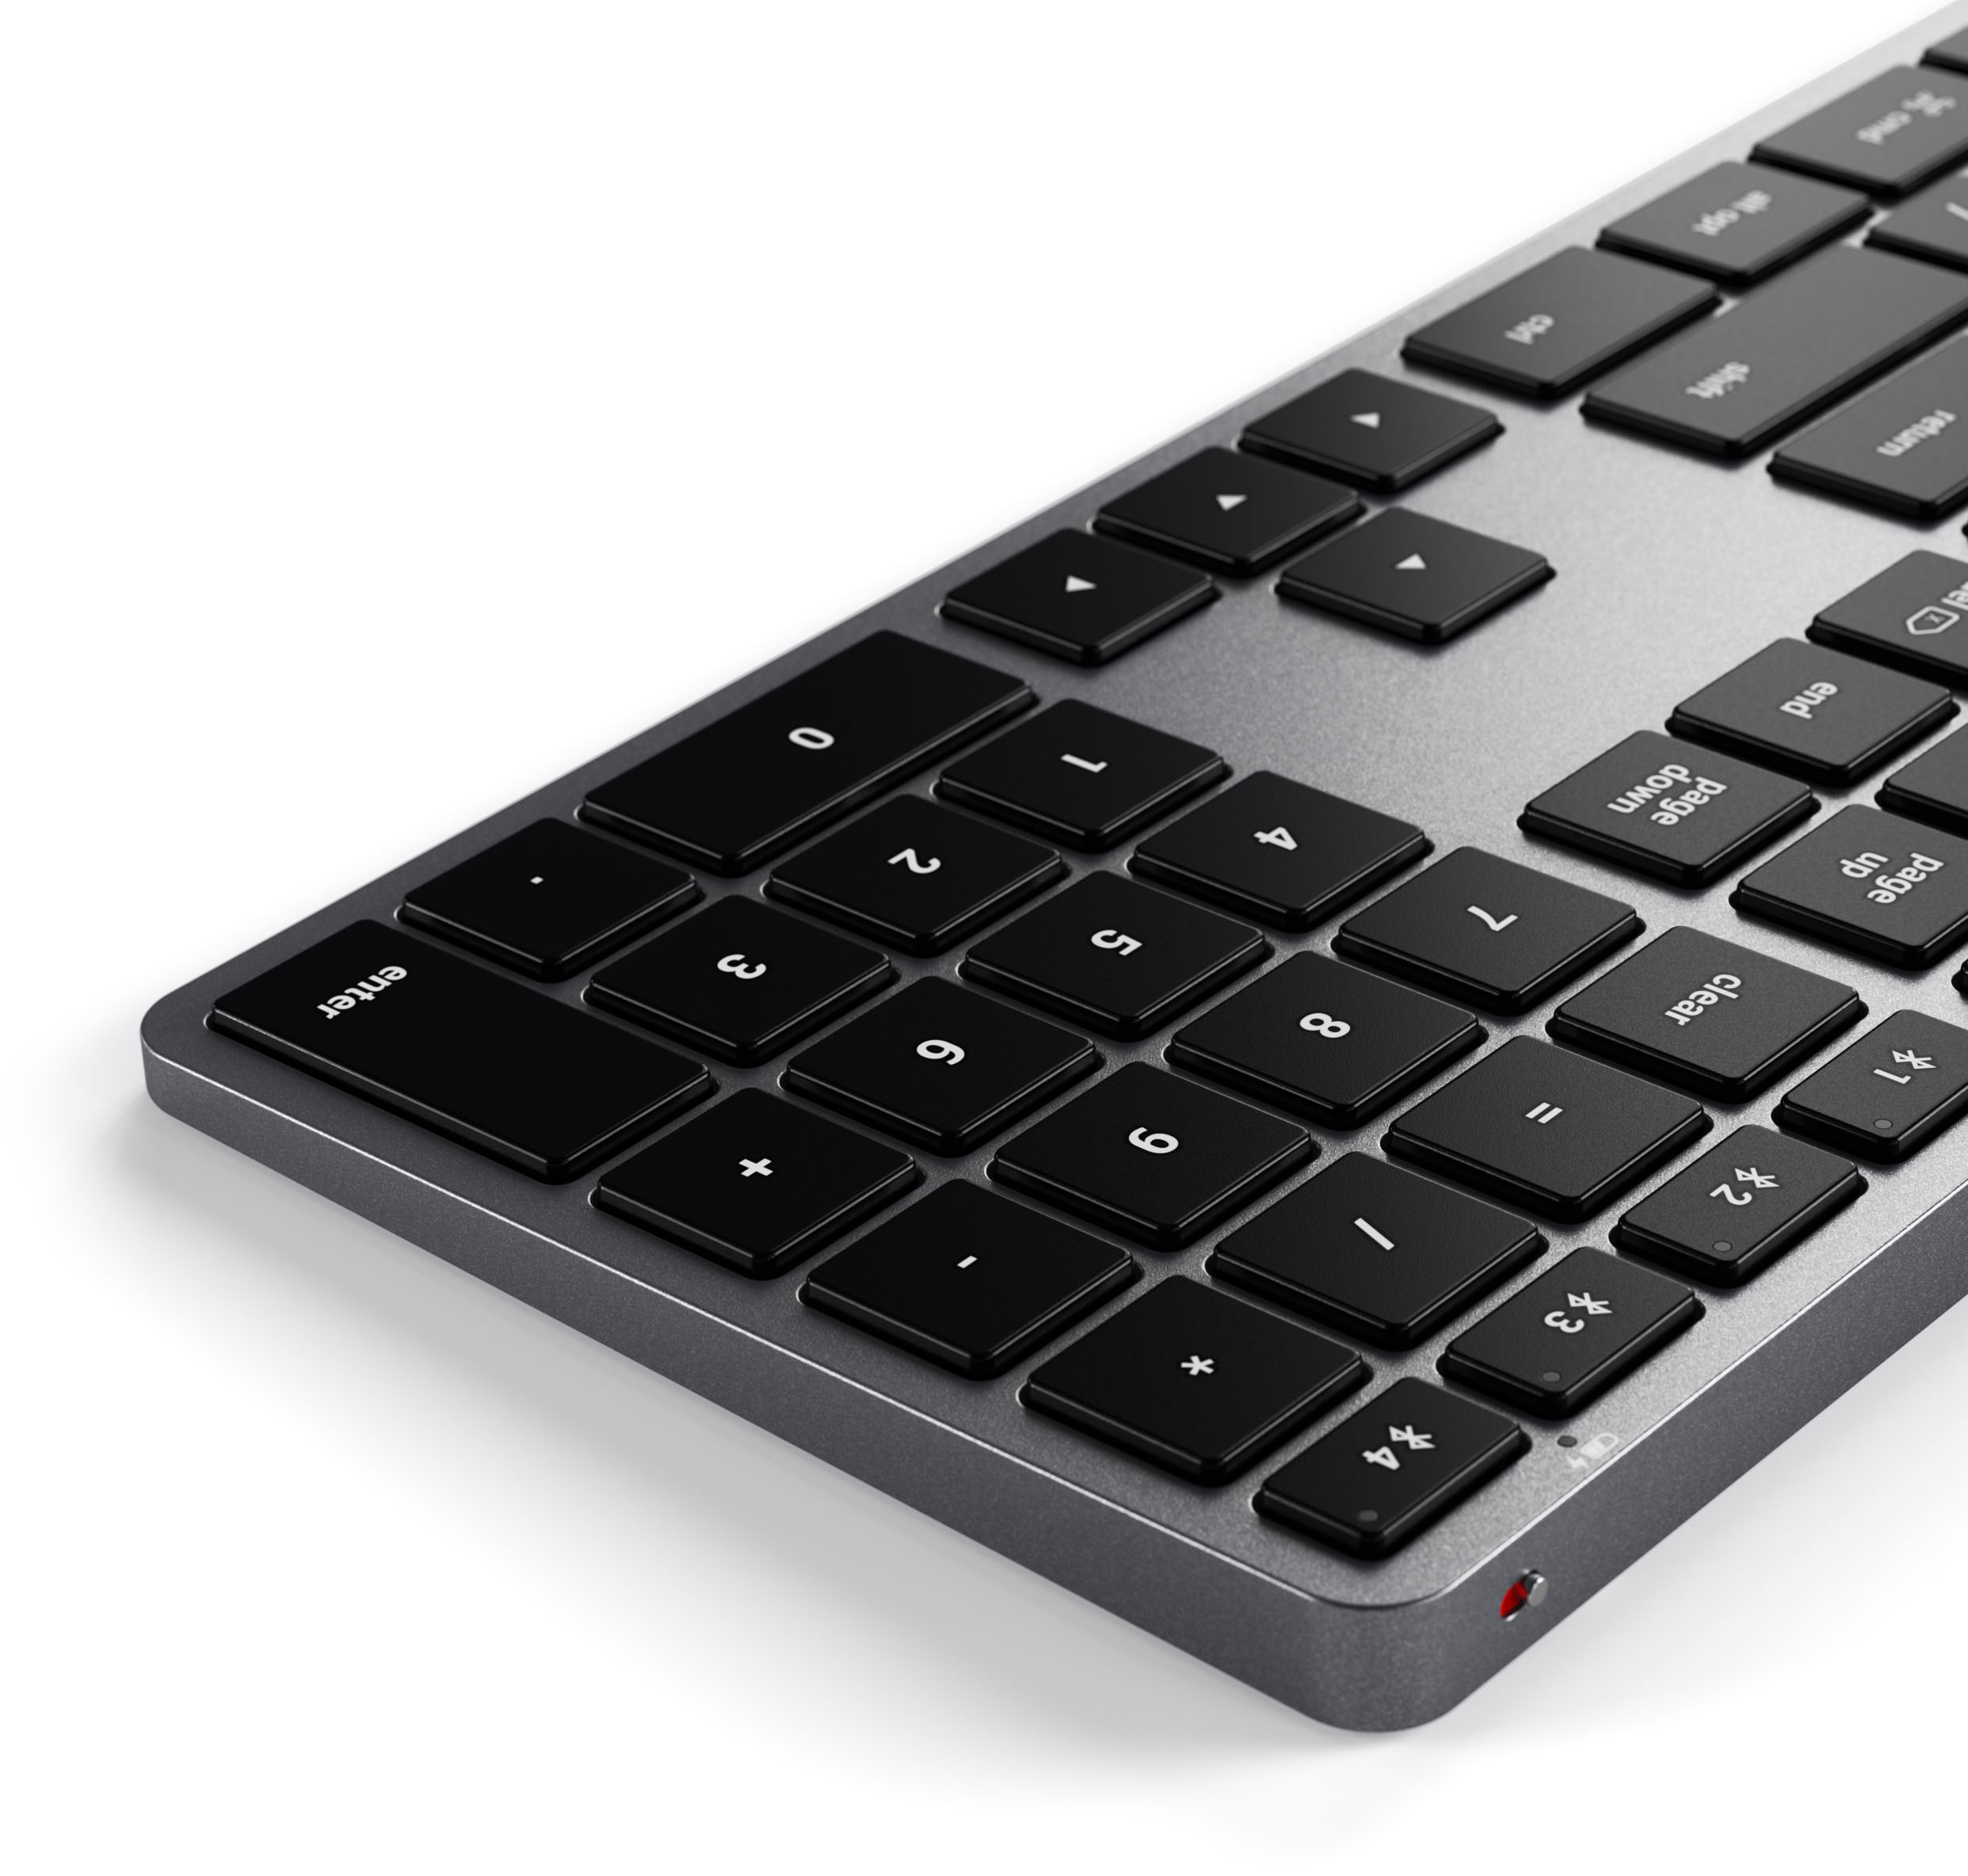  Satechi Slim X3 Bluetooth Backlit Keyboard with